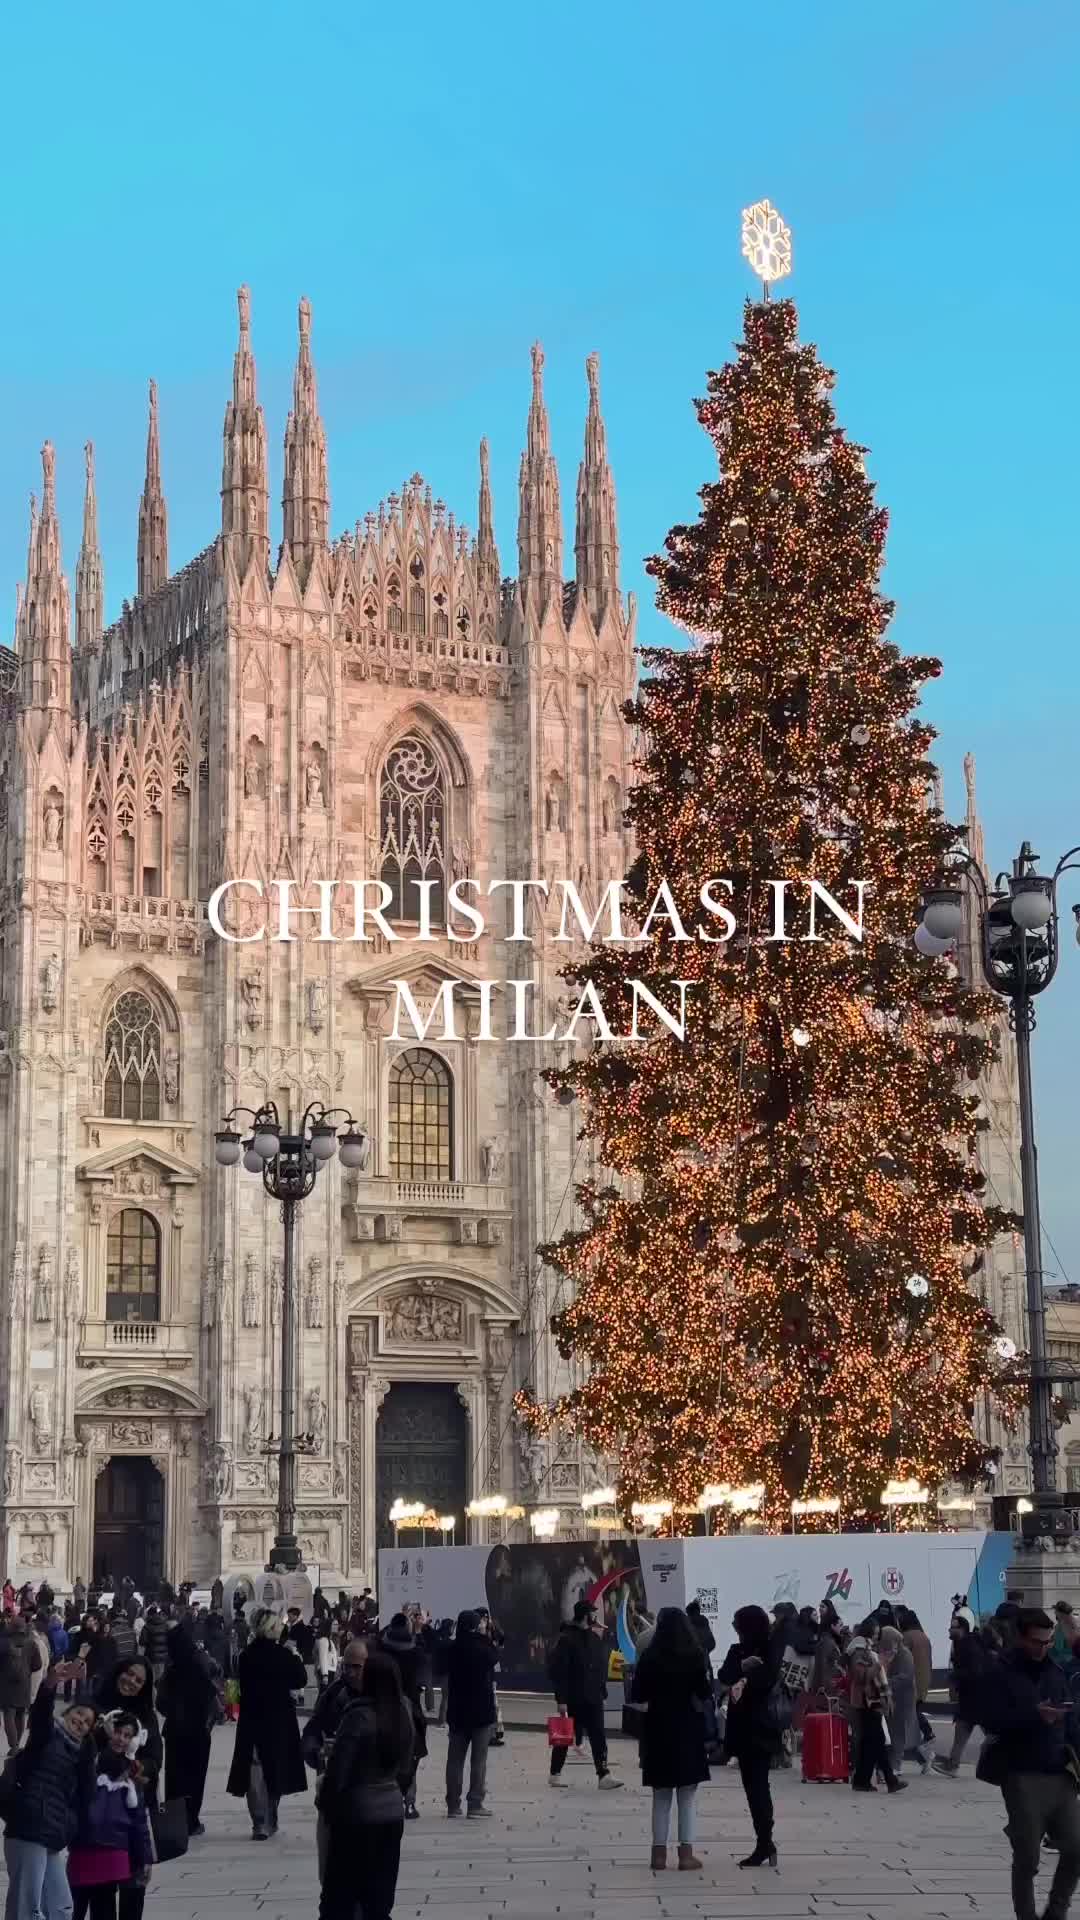 Enchanted Christmas in Milan: Lights, Markets & Fun